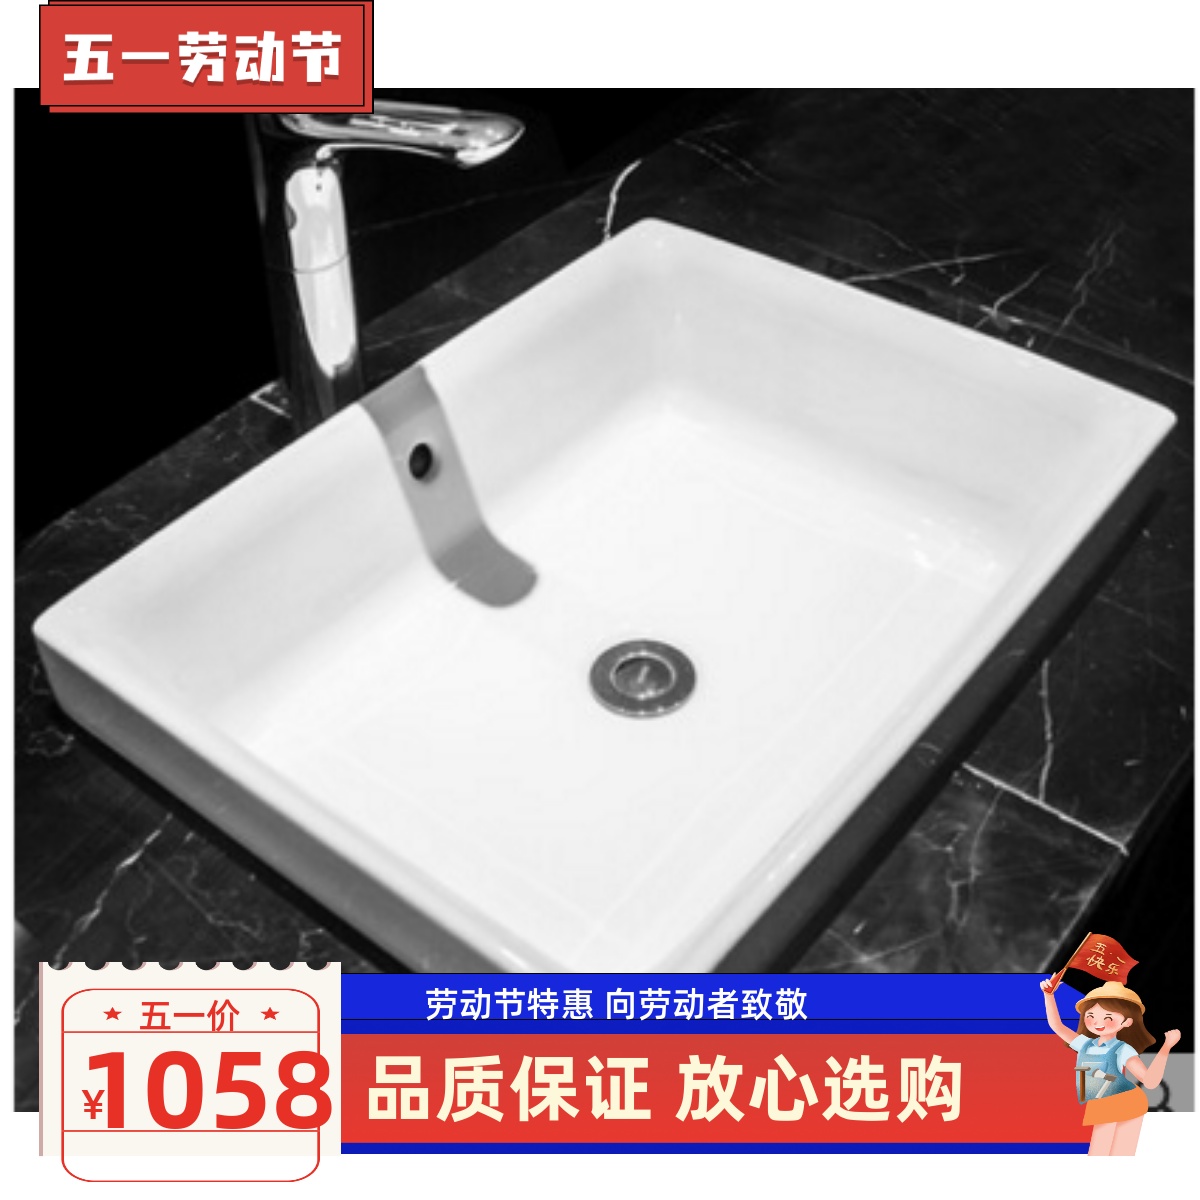 TOTO洁具卫浴 洗面器 桌上式洗面器  LW1715B